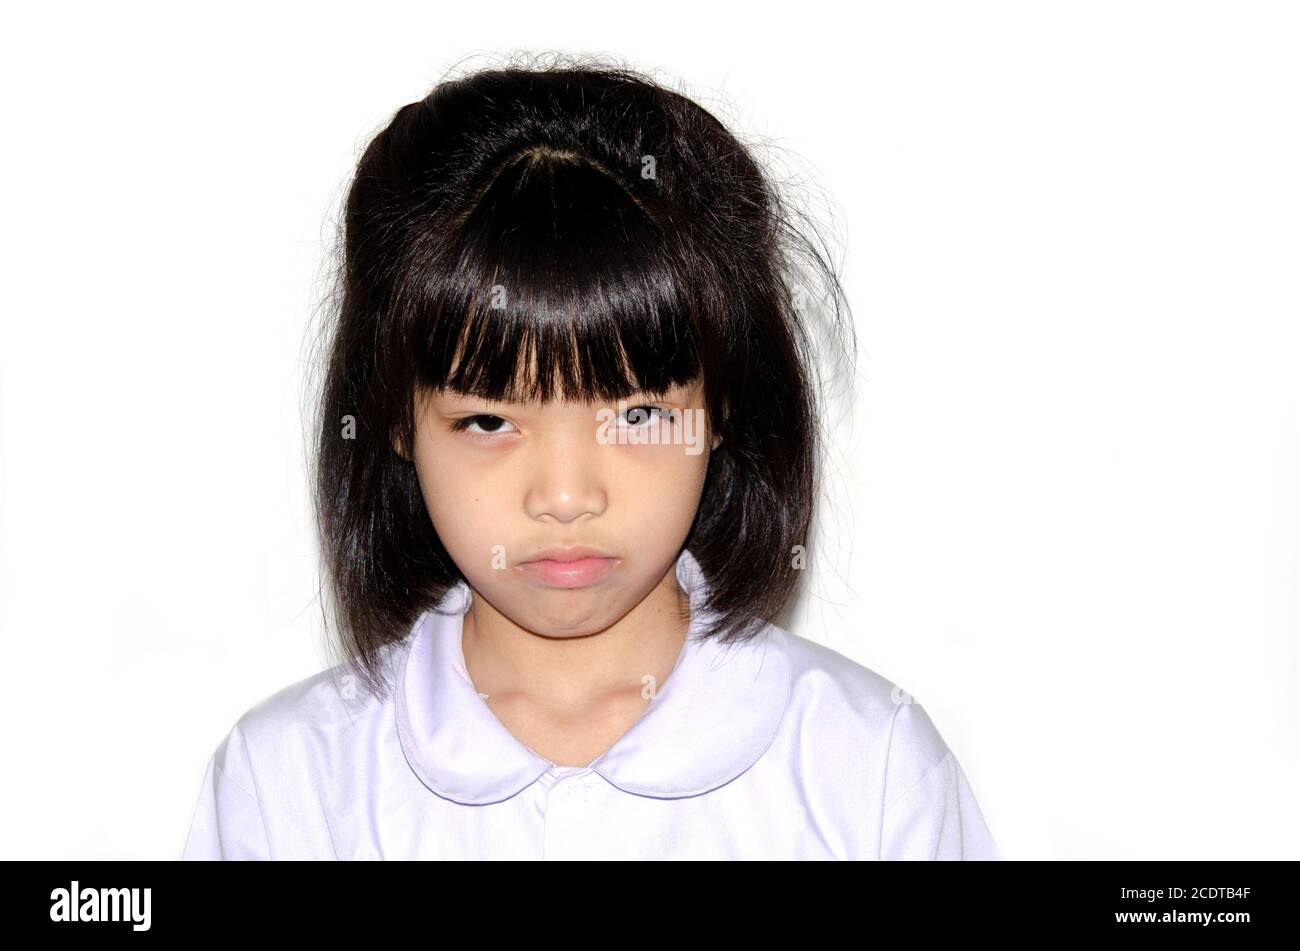 Asian girls face anger Stock Photo